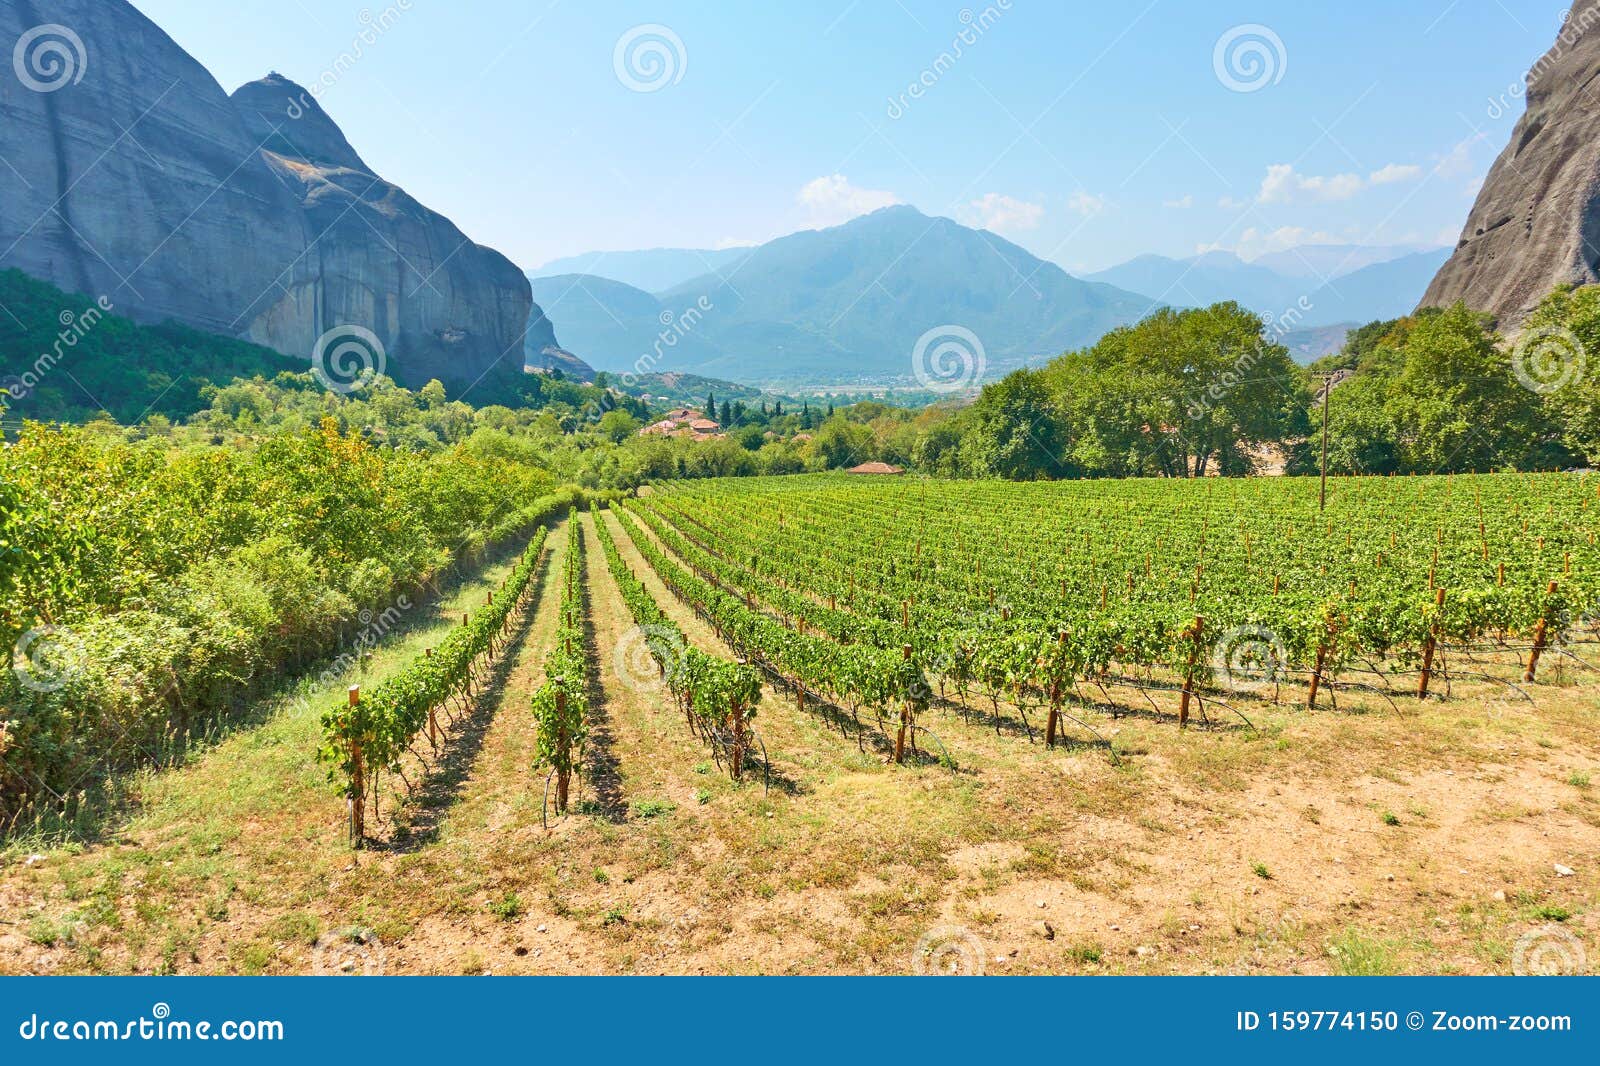 rural landscpe with vineyard